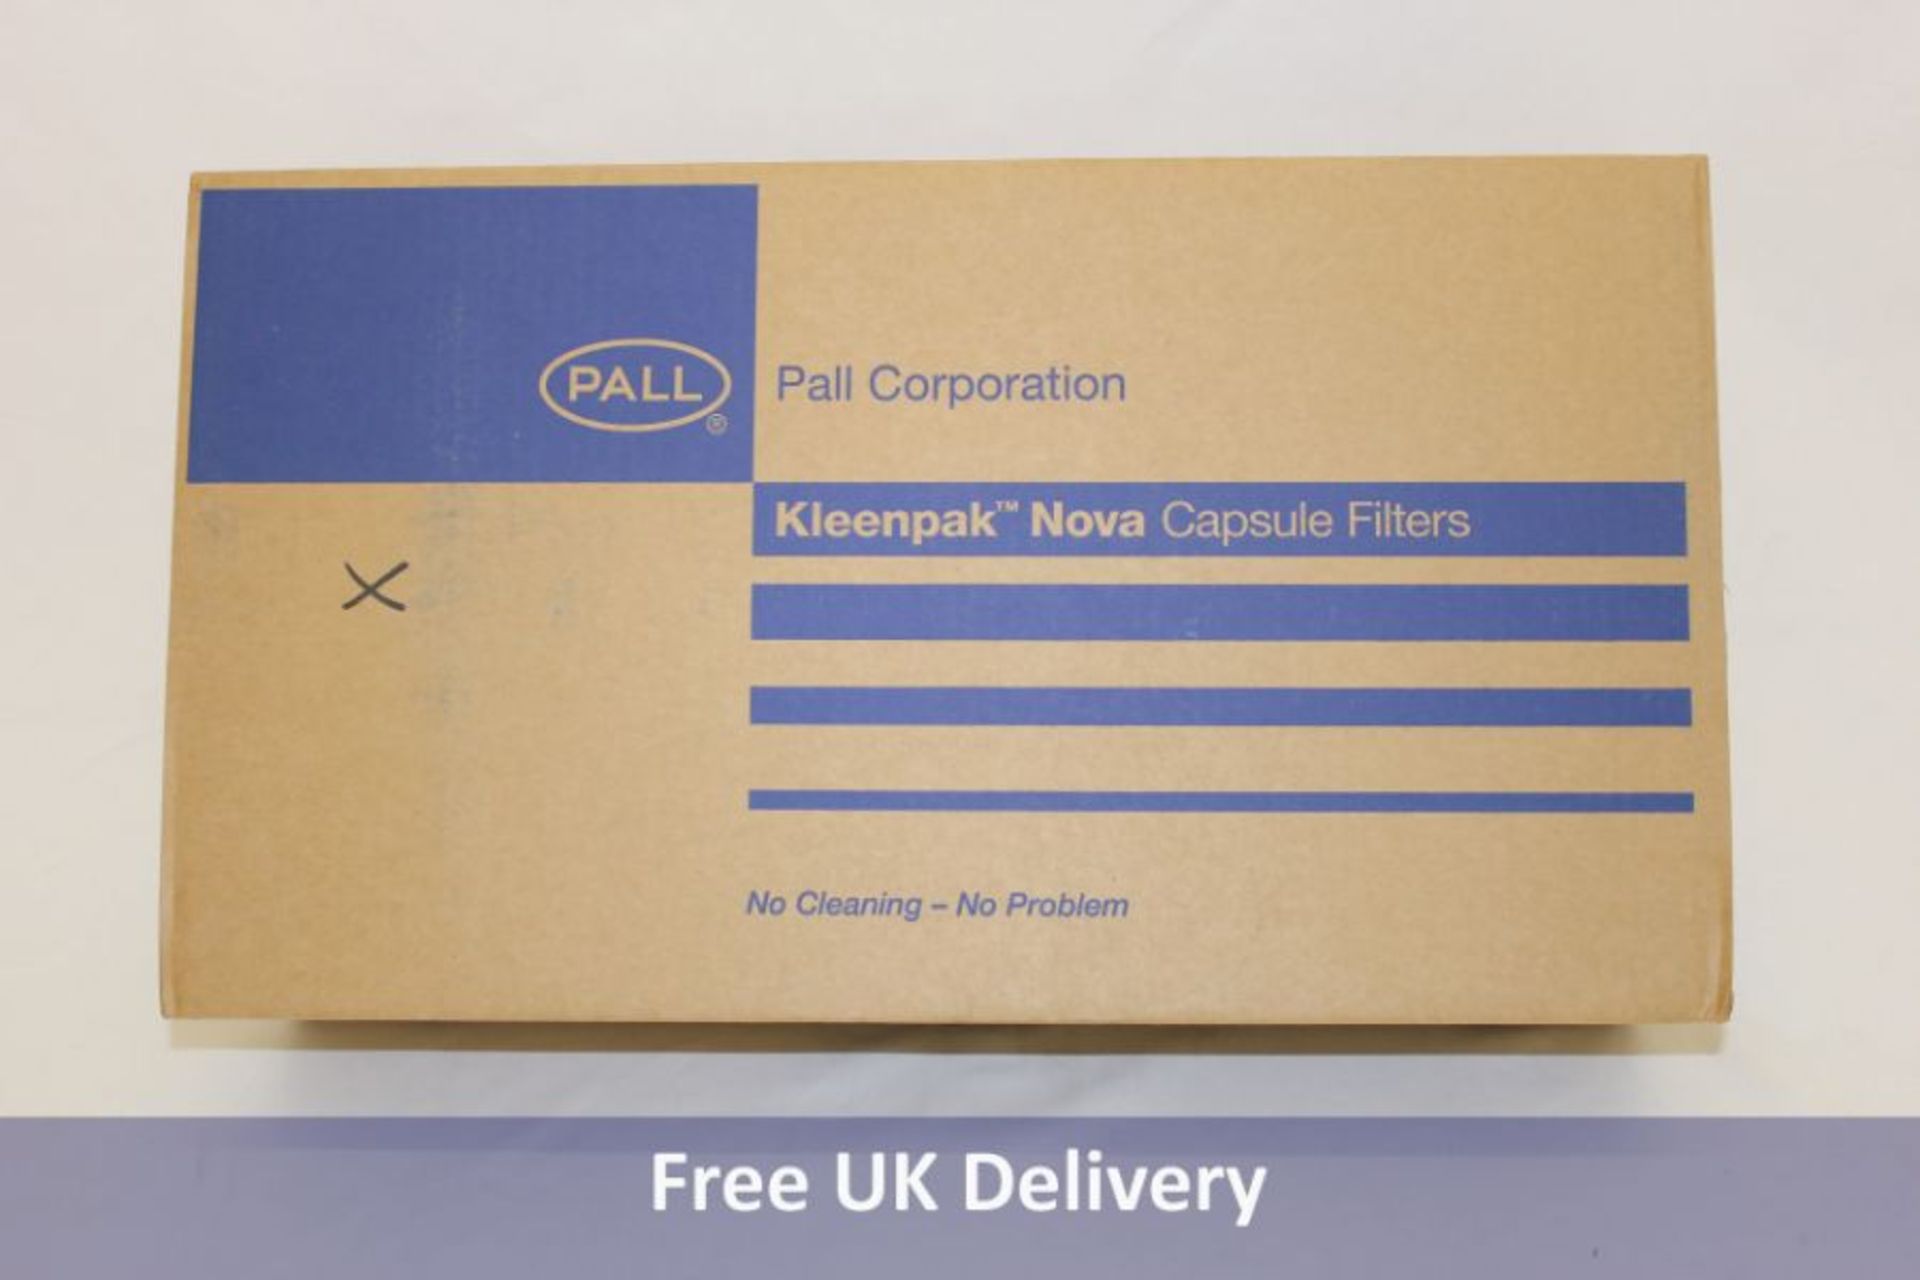 Two Pall Corporation Kleenpak Nova Capsule Filters